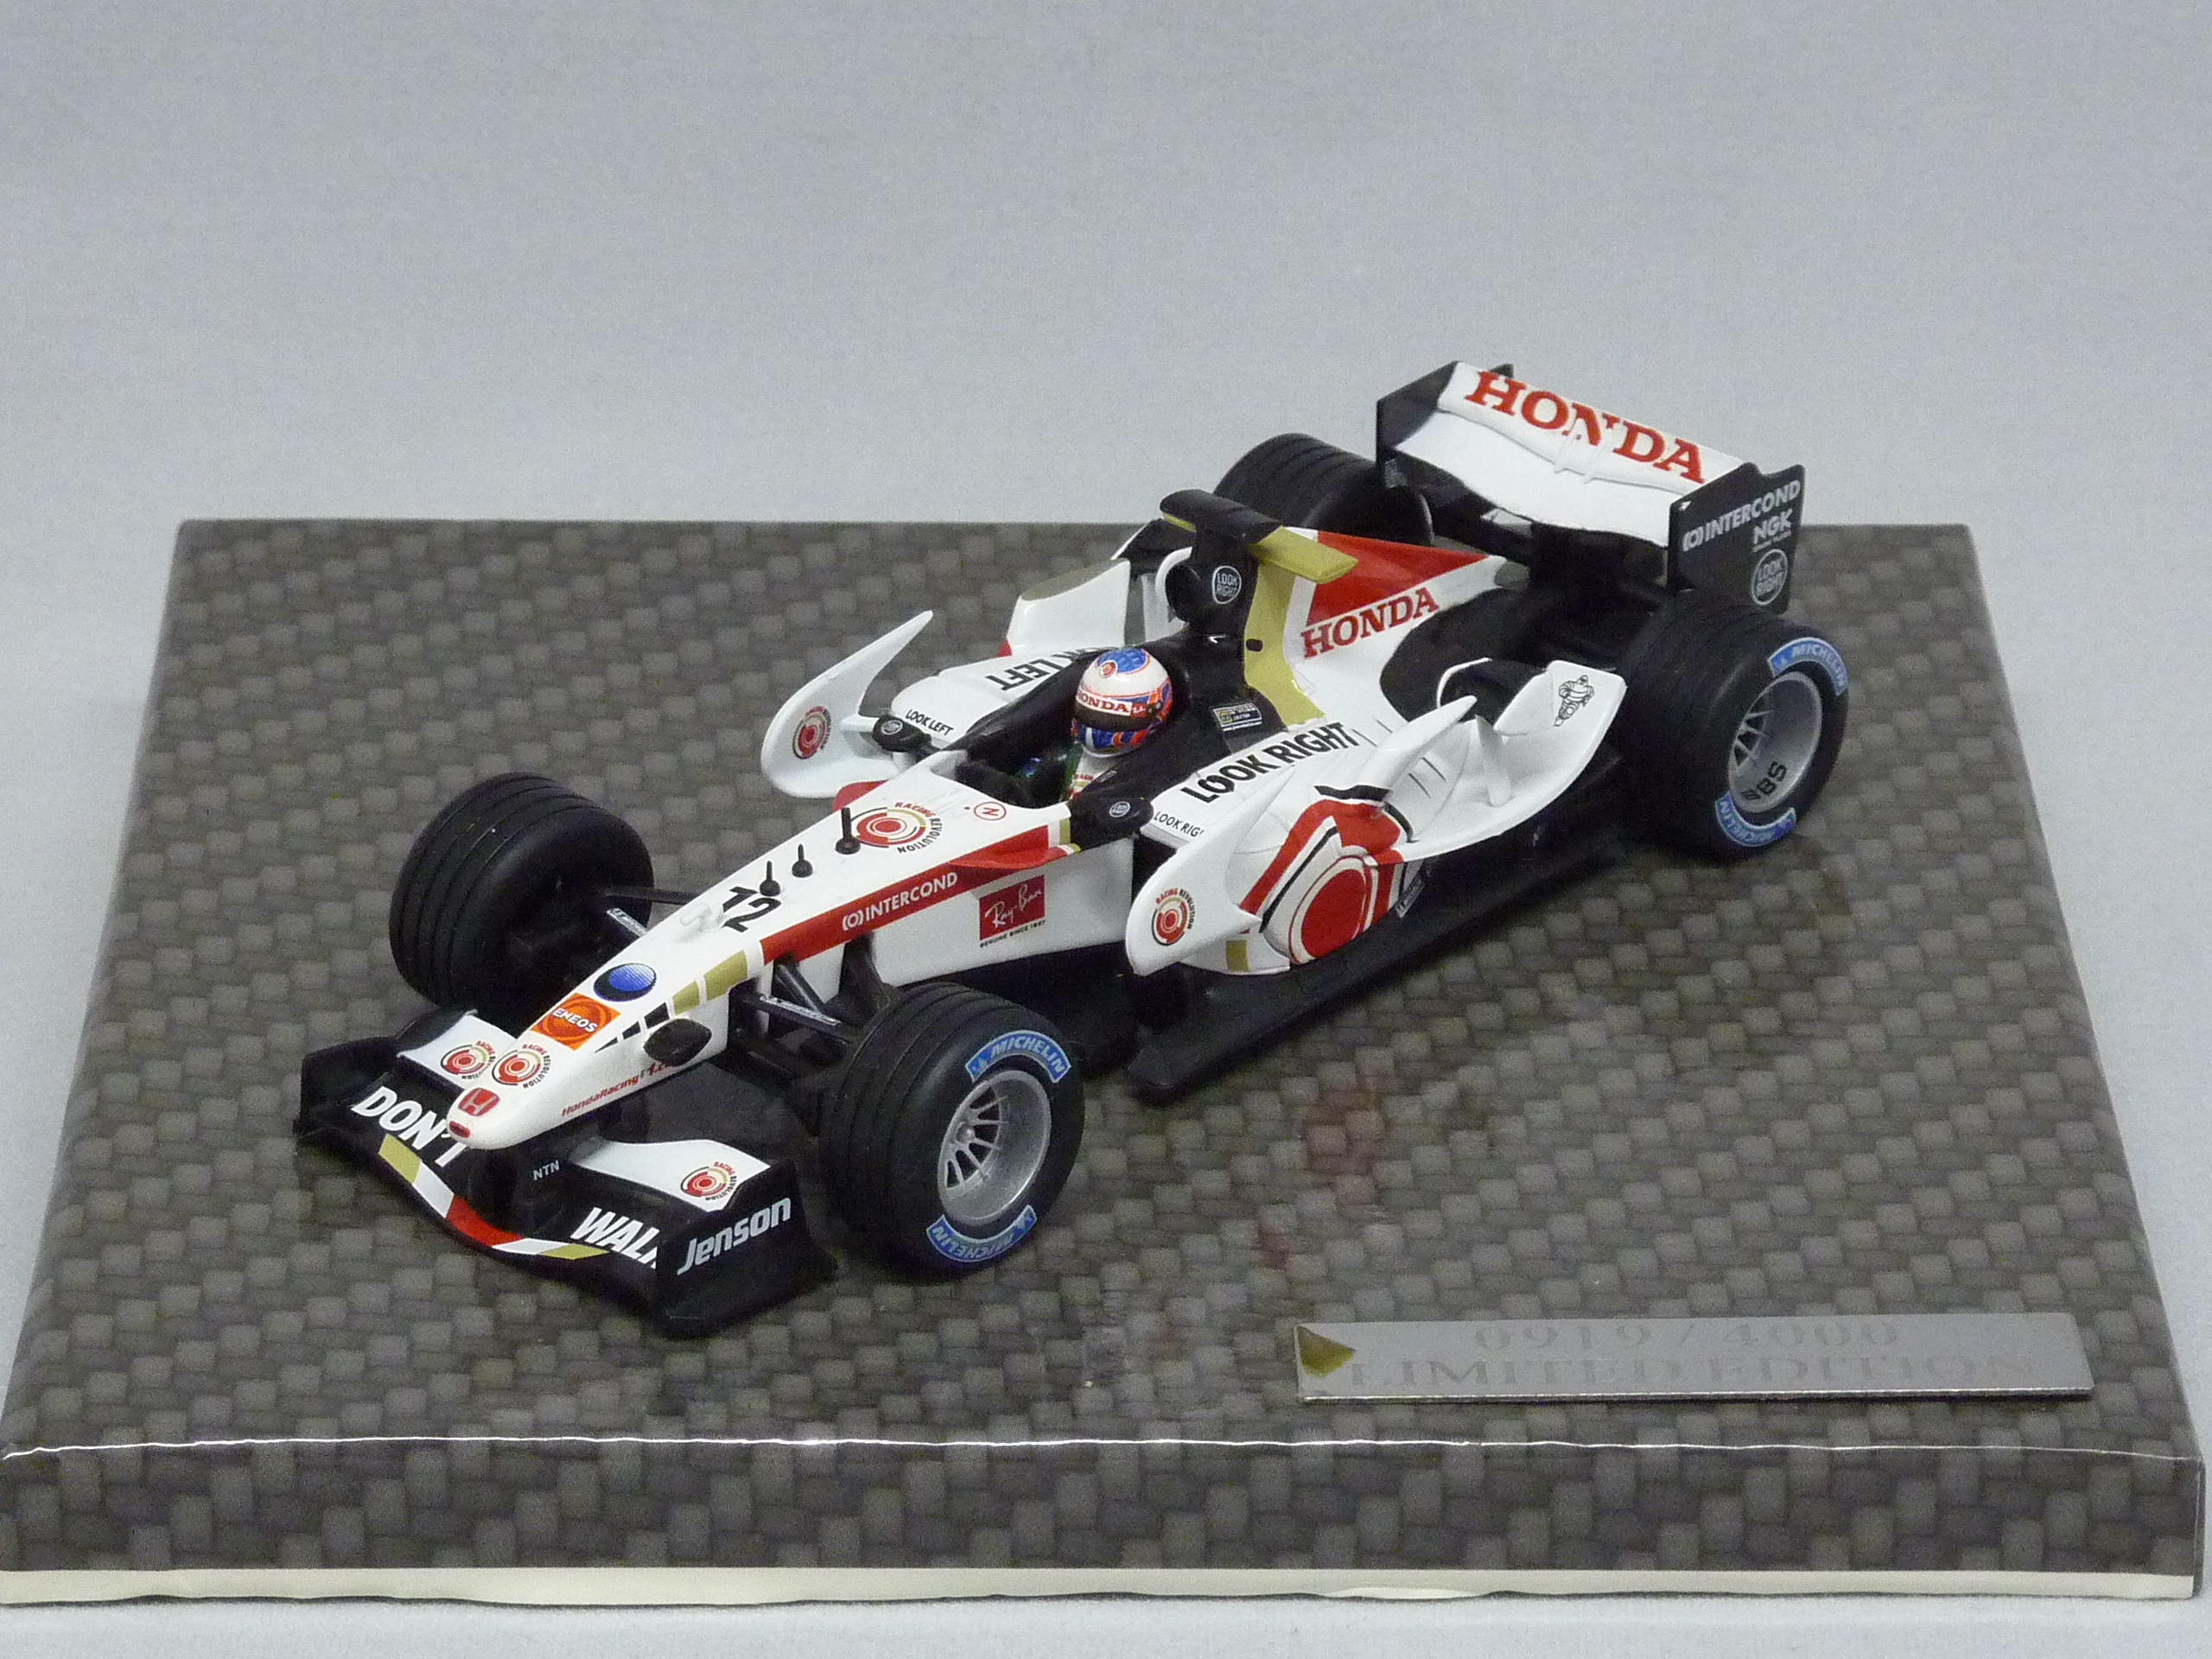 Minichamps 1:43 HONDA F1 RACING RA106 JENSON BUTTON WINNER HUNGARY GP 2006 ‘DIRT 